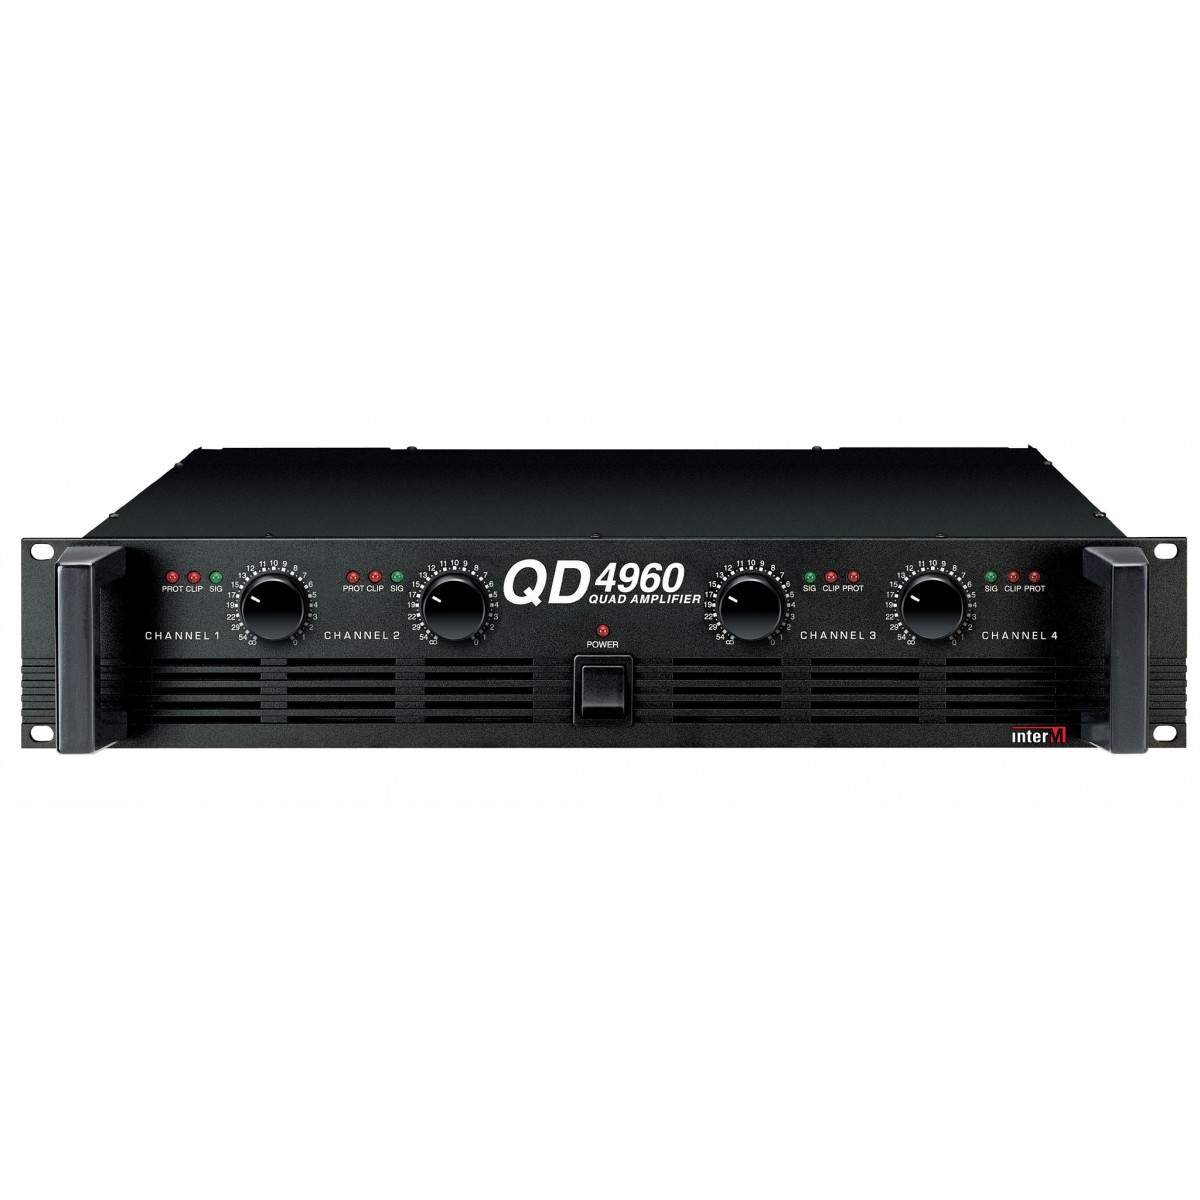 QD-4960 Amplificador 4 canales 170 watts por canal 8 ohms INTER M